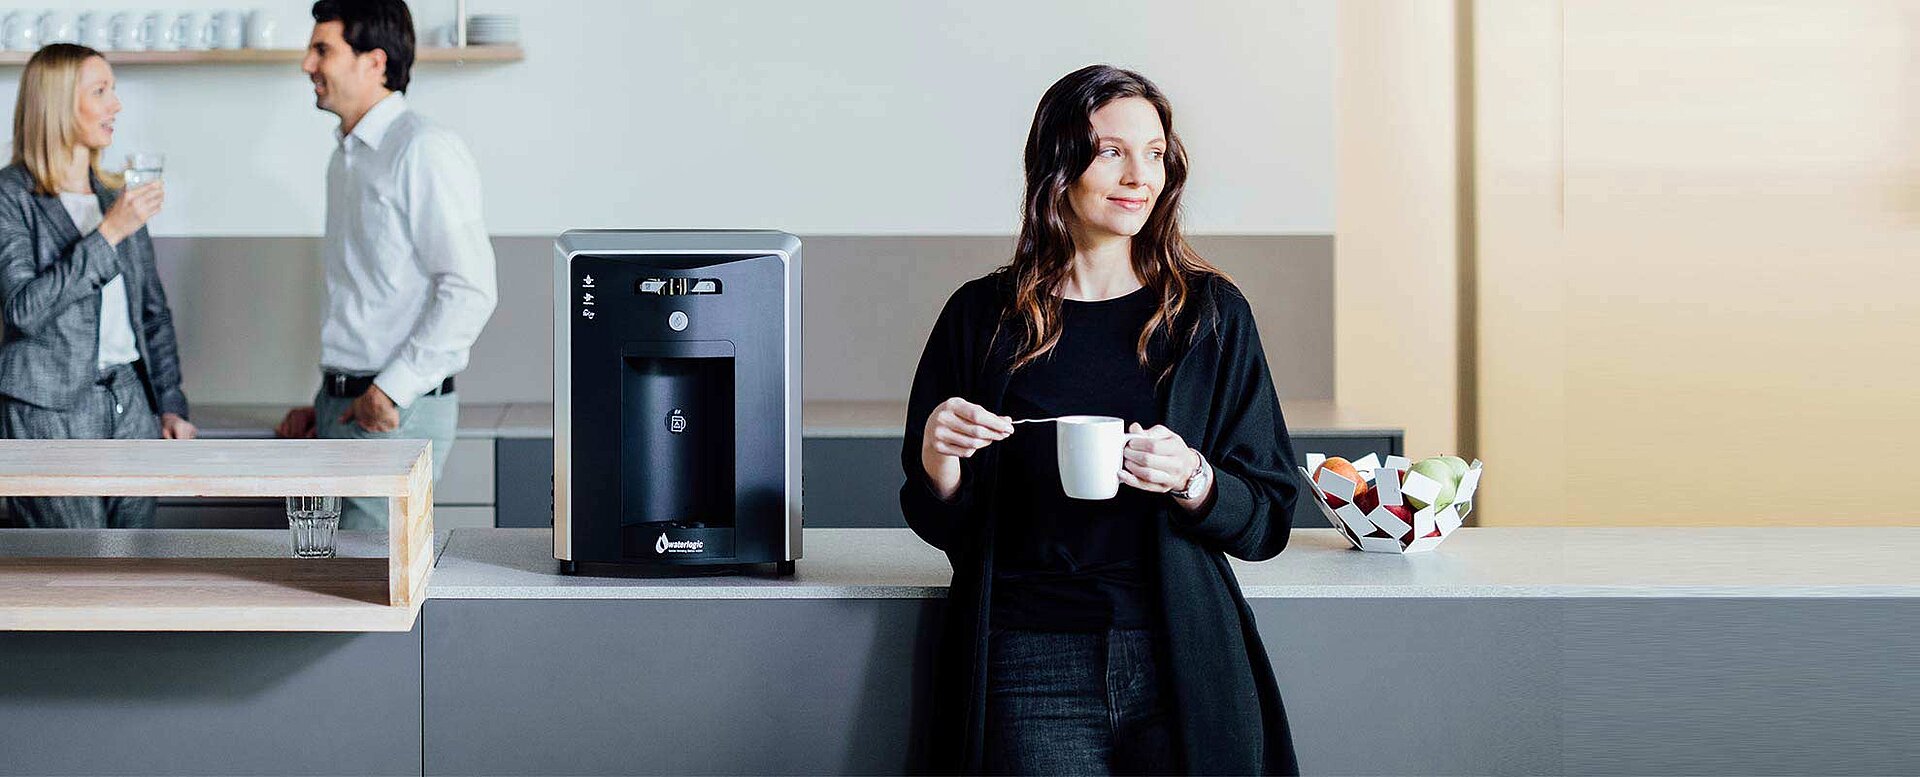 Woman by hot water dispenser drinking tea